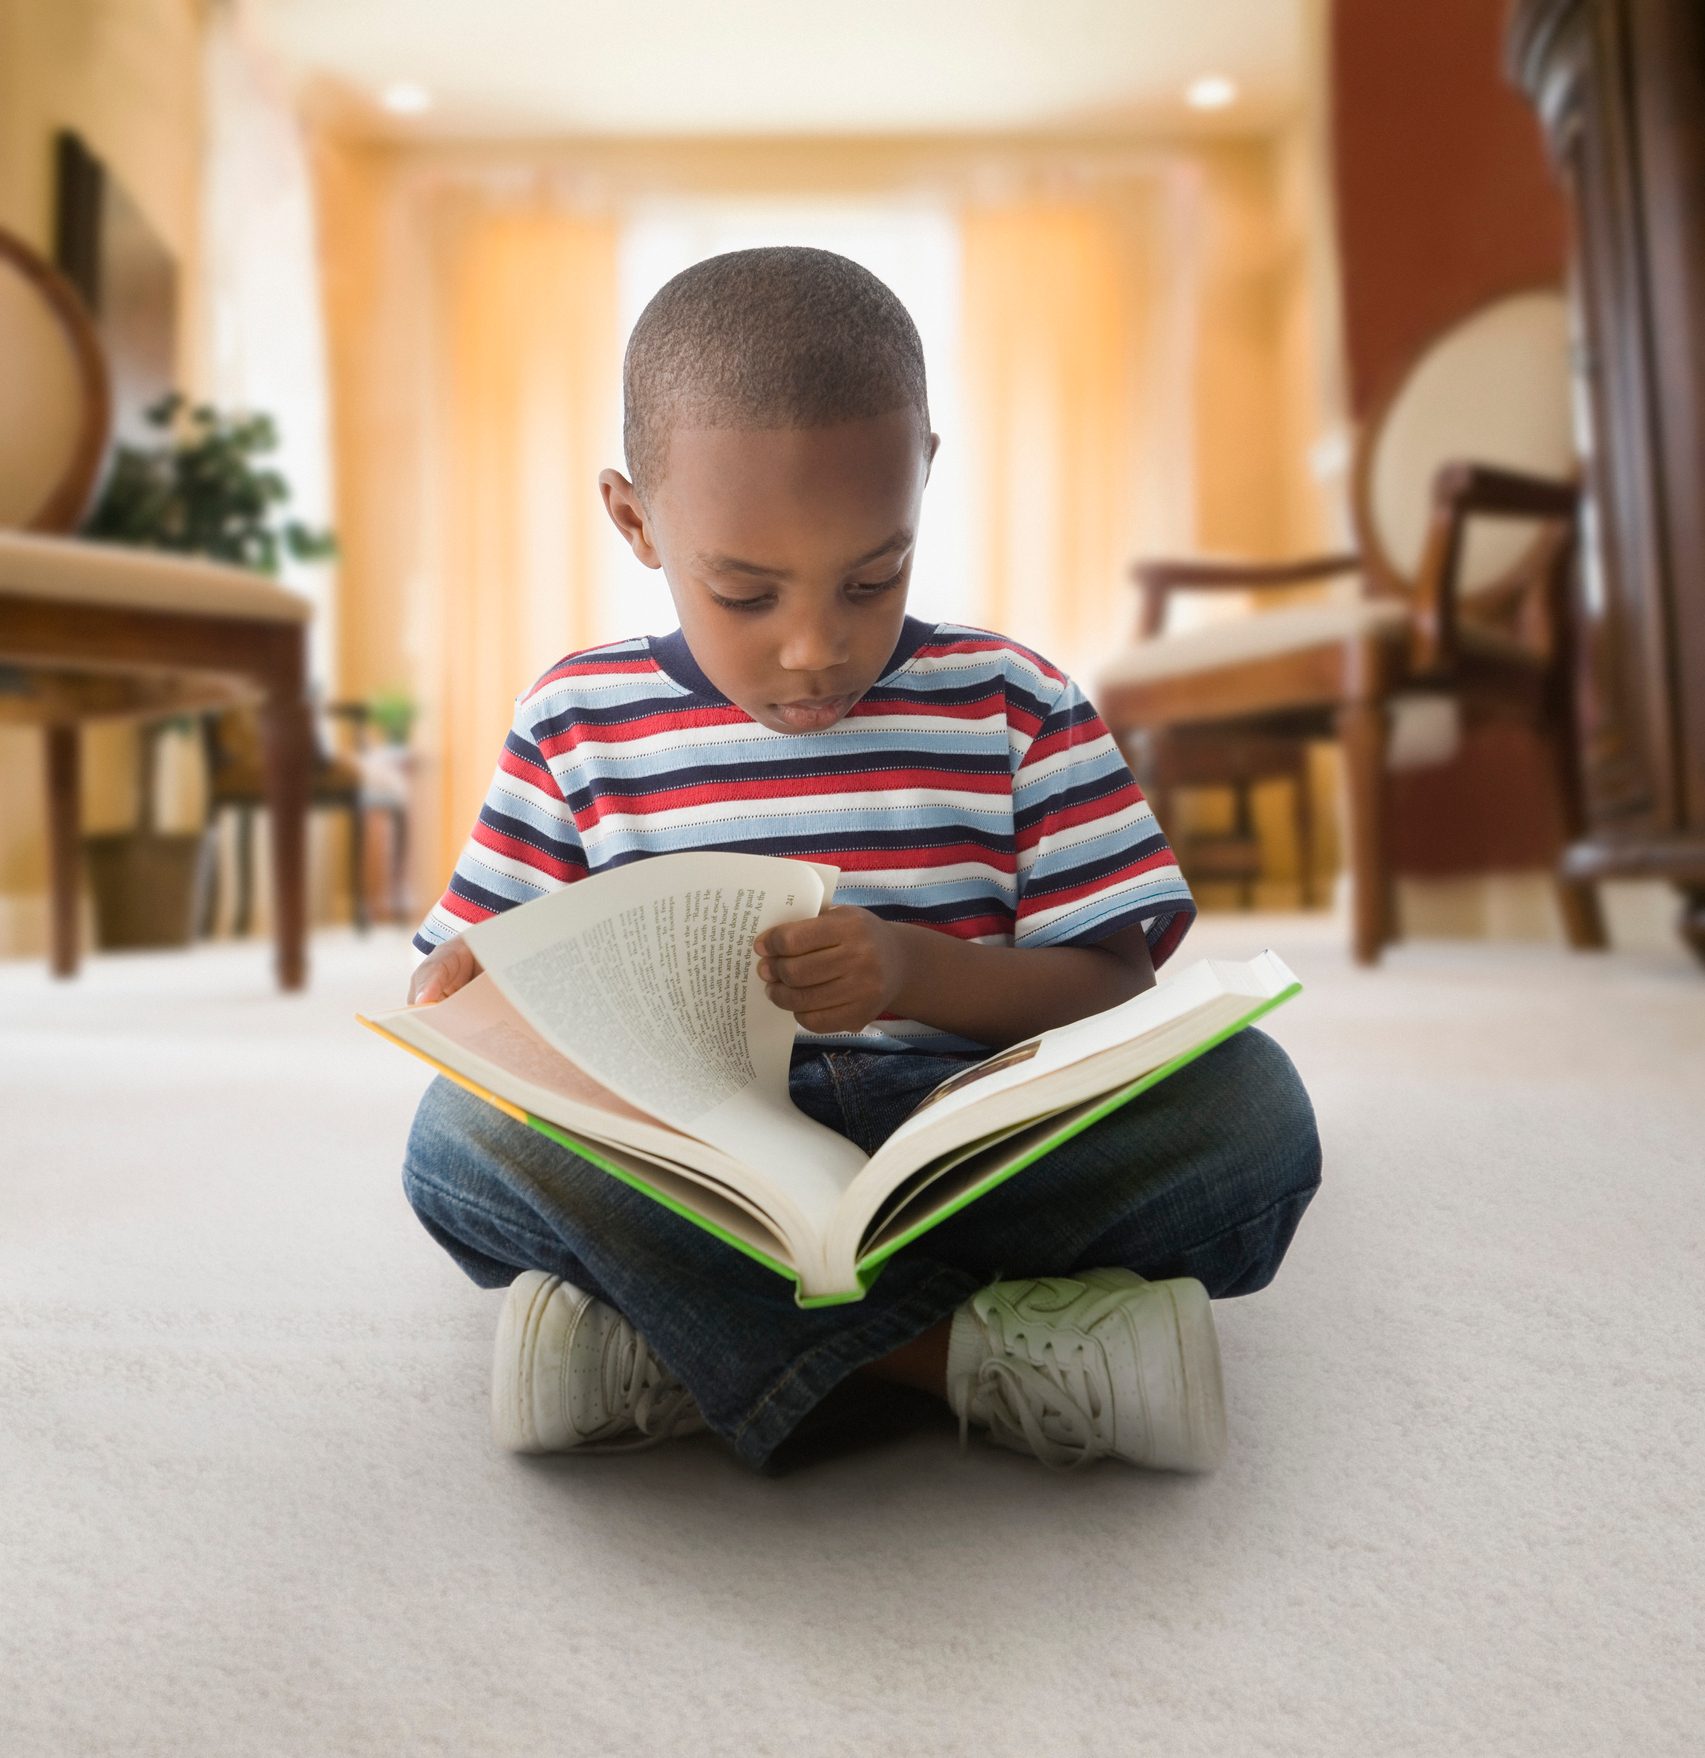 African American boy reading on floor